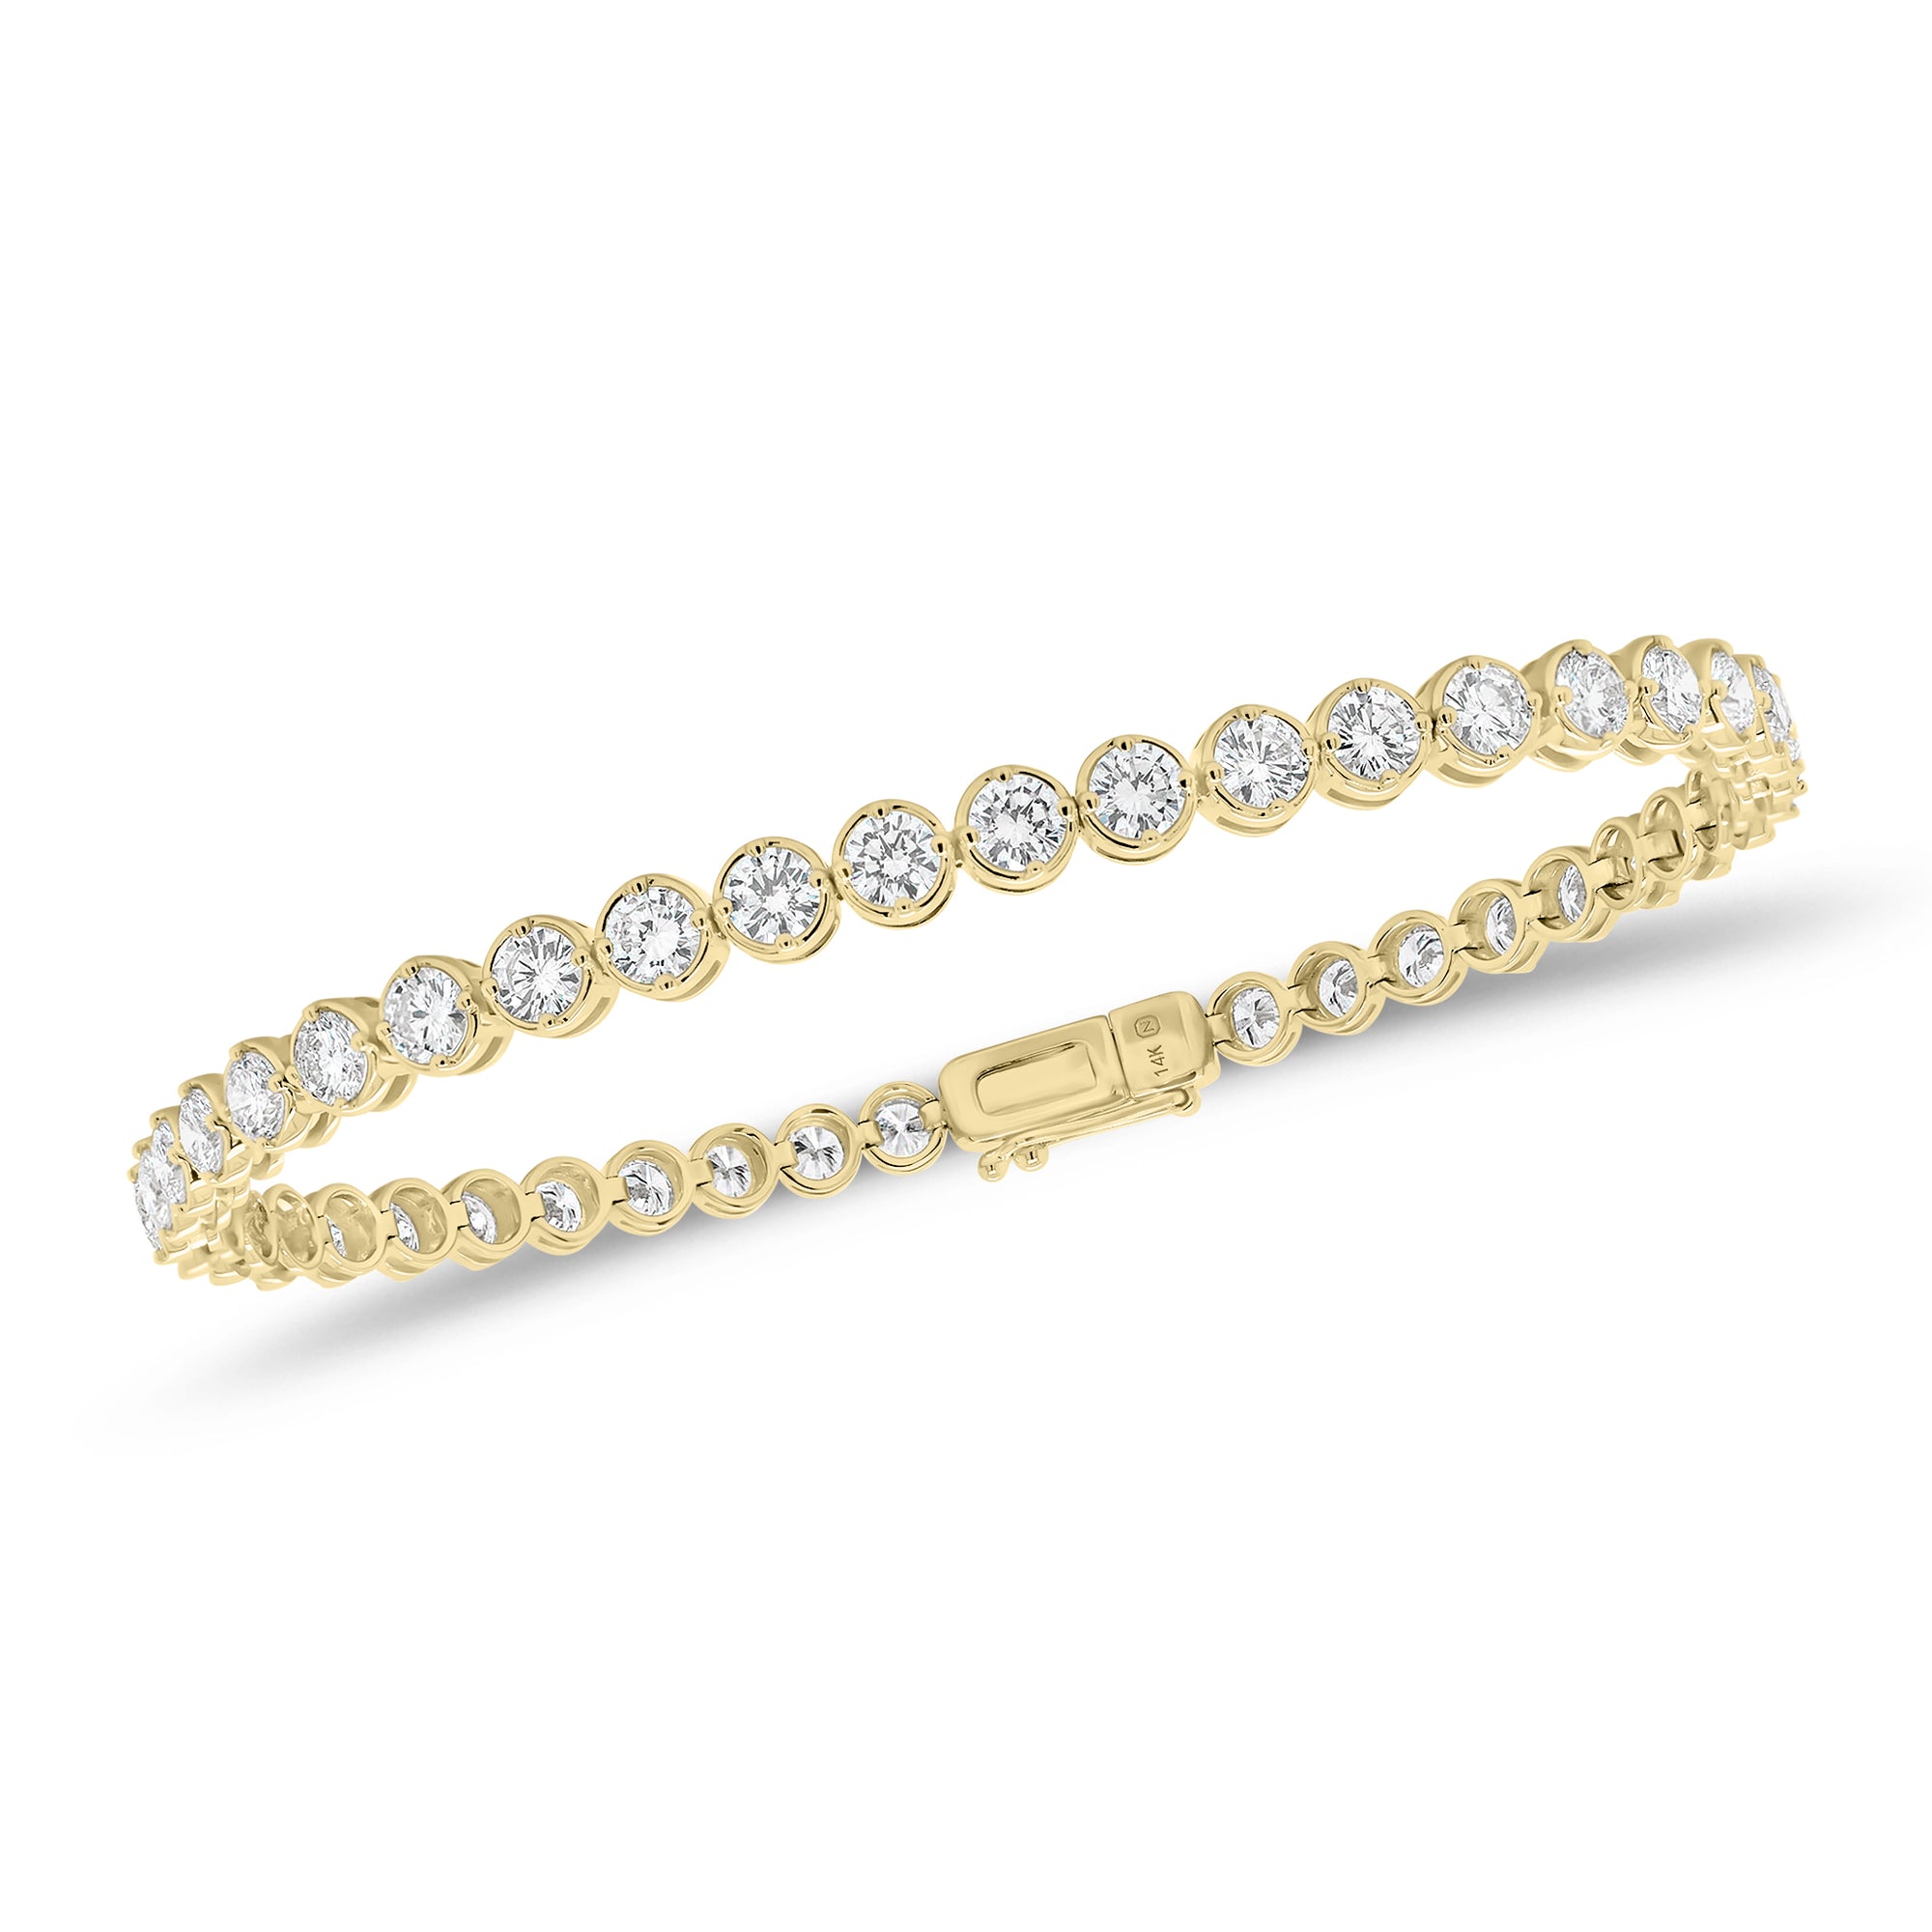 Bezel-Set Diamond Tennis Bracelet - 14K gold weighing 6.42 grams - 45 round diamonds weighing 4.0 carats